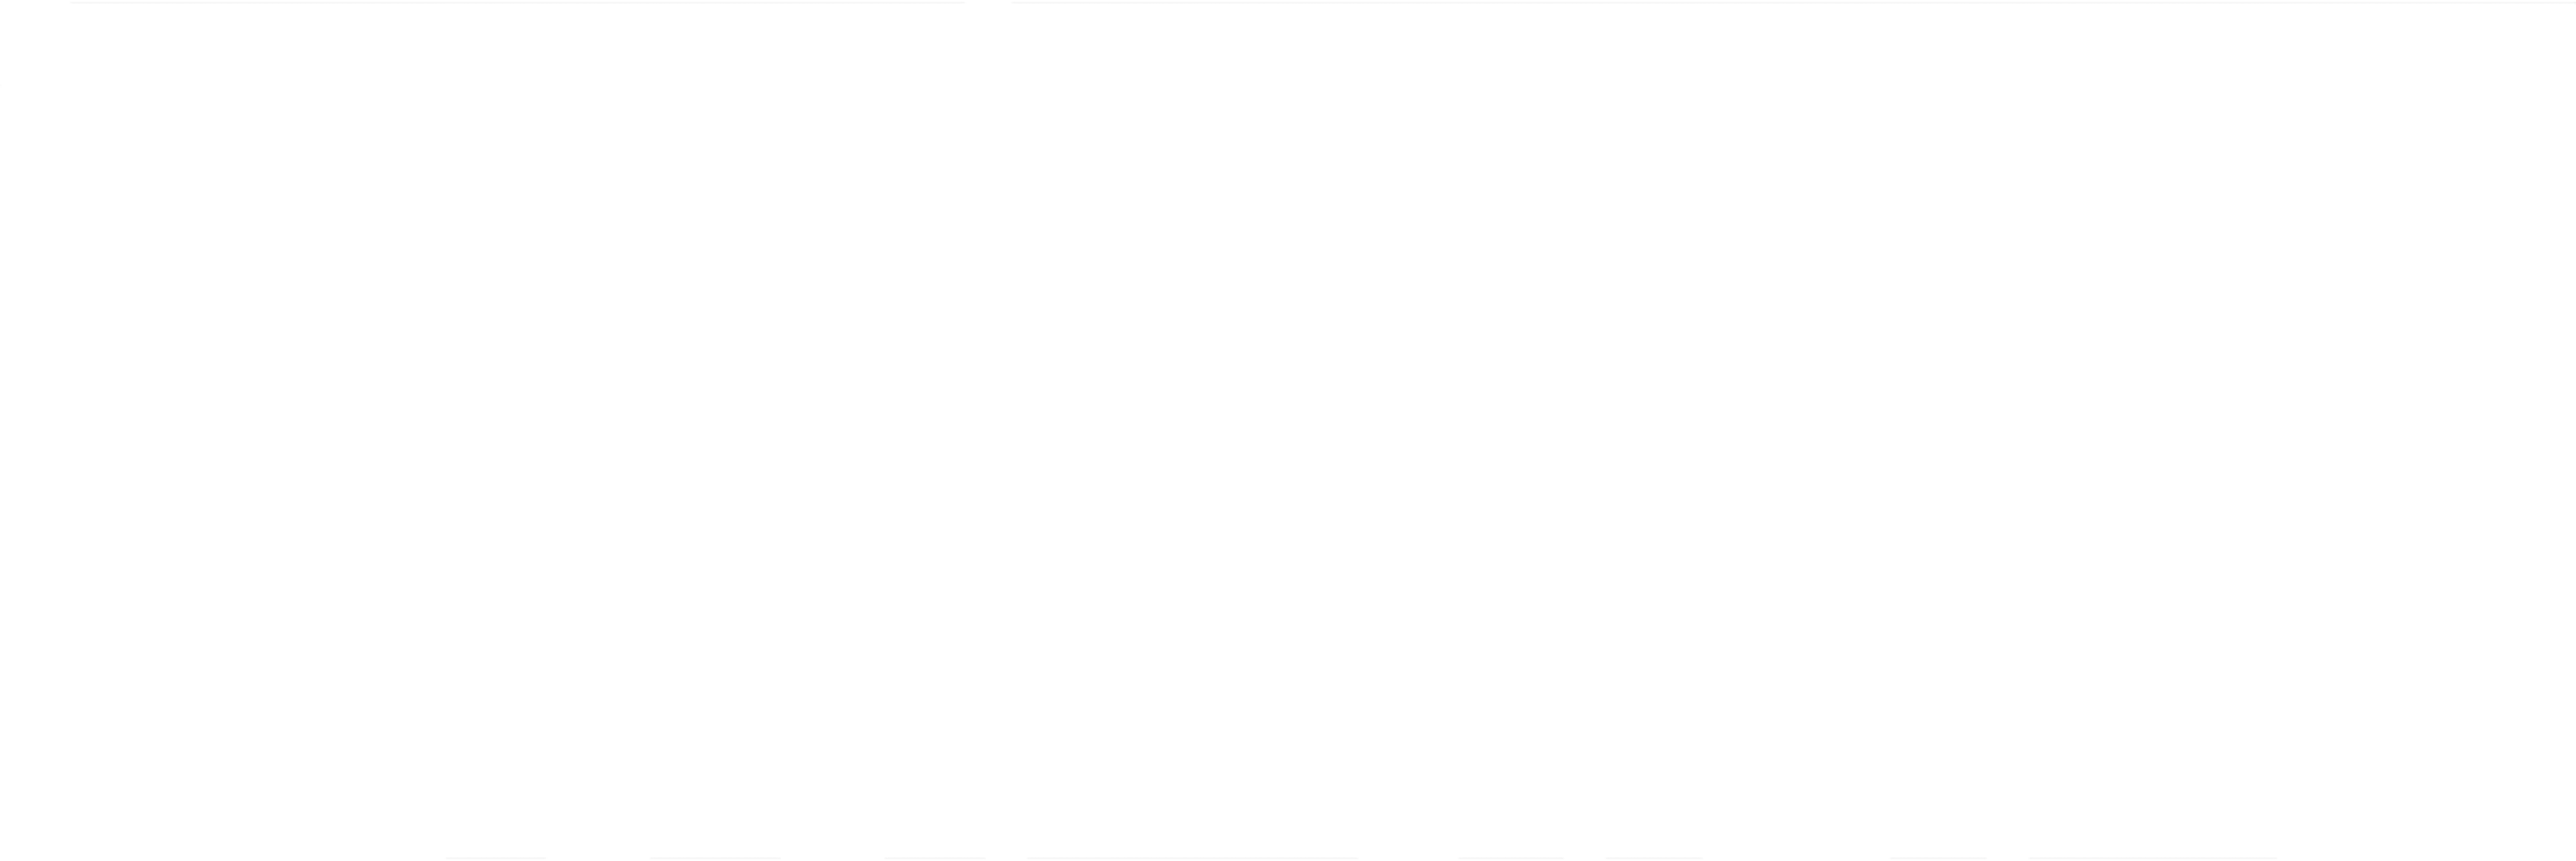 twisted-metal-logo